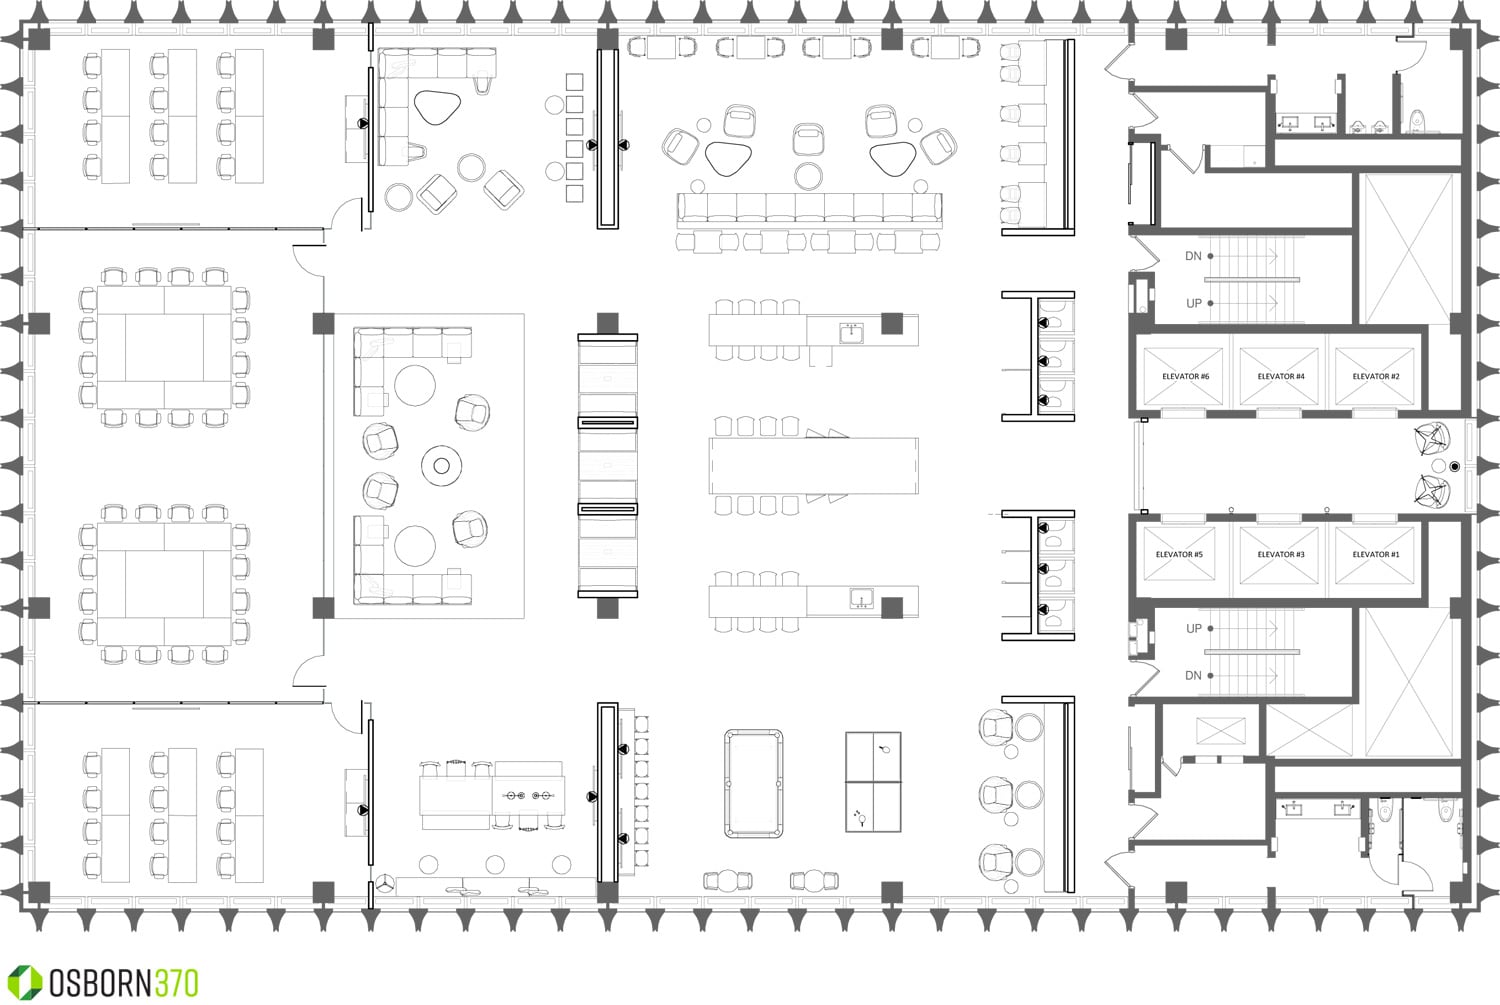 amenity level floorplan